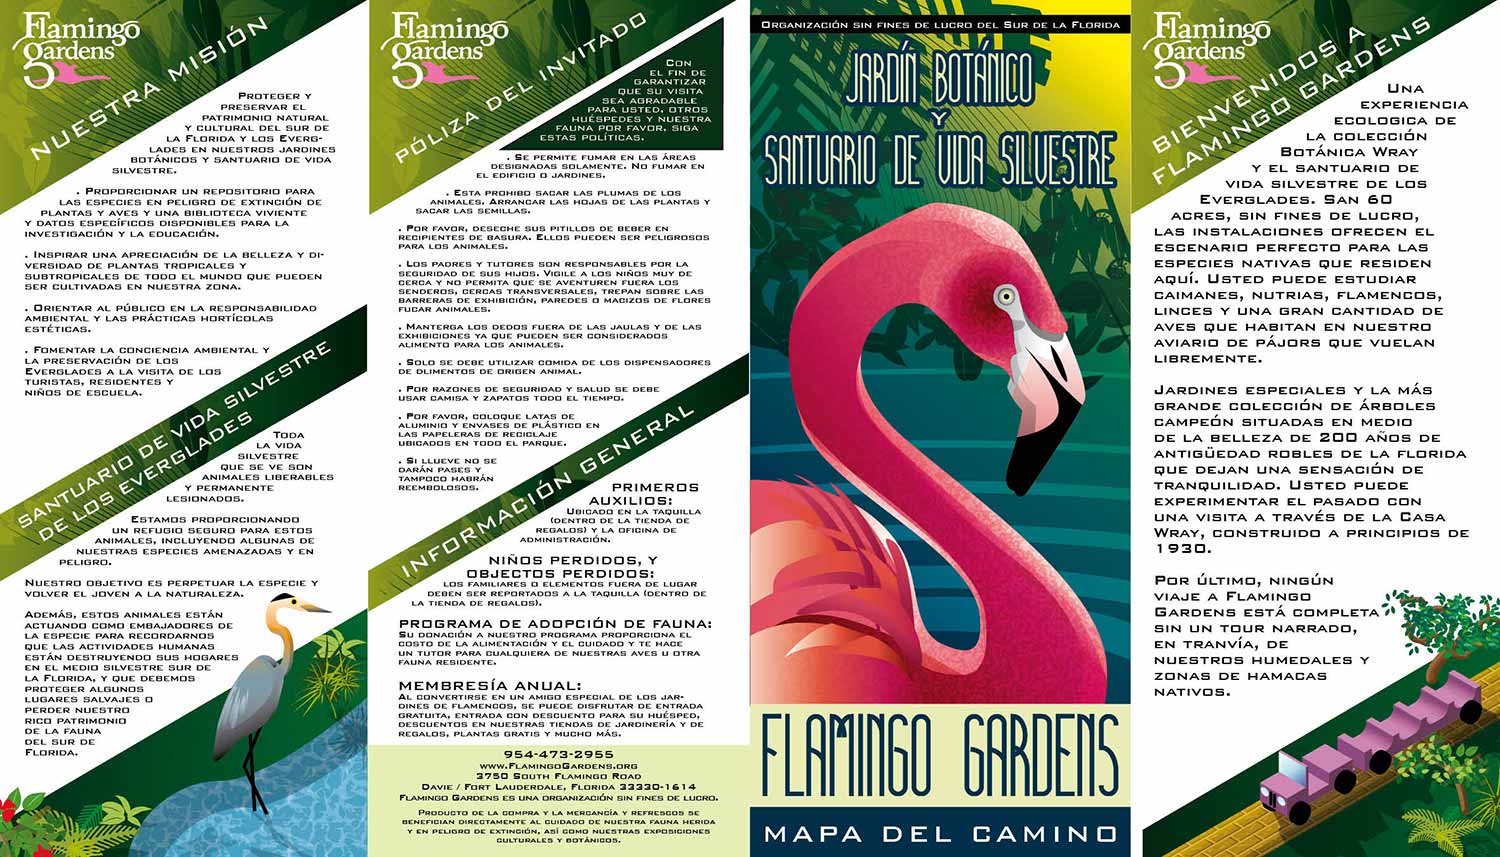 Flamingo Gardens Brochure in Spanish